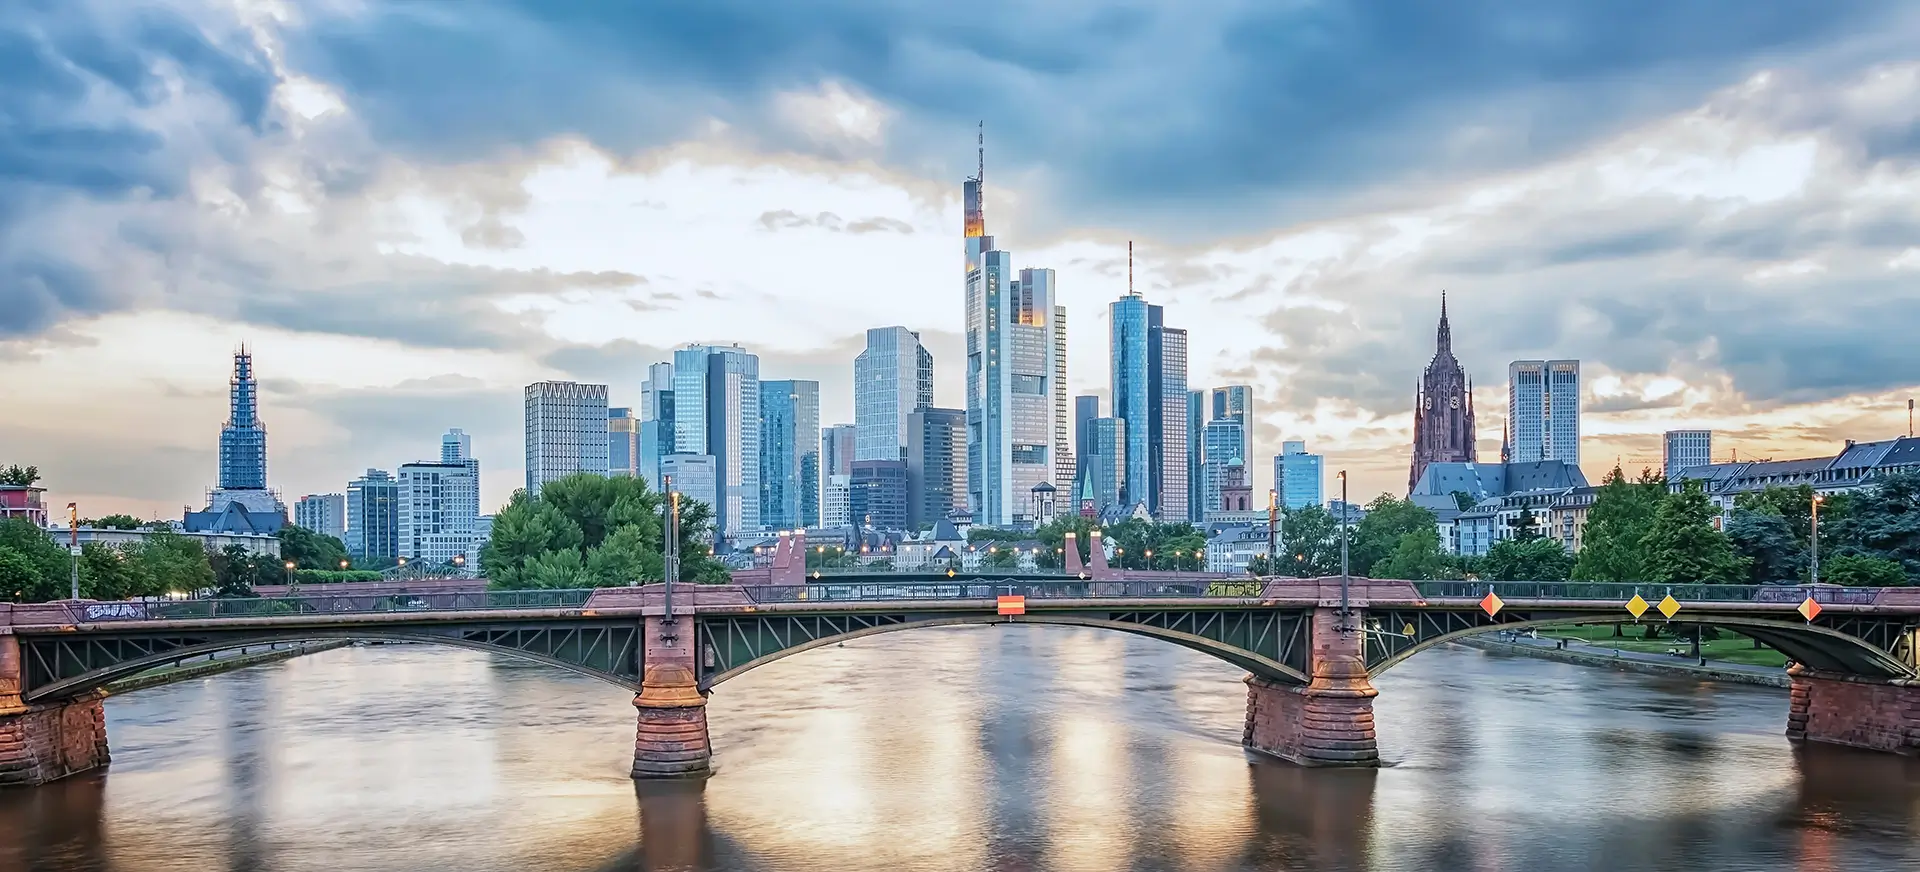 Bridge with buildings in the background in Frankfurt Germany